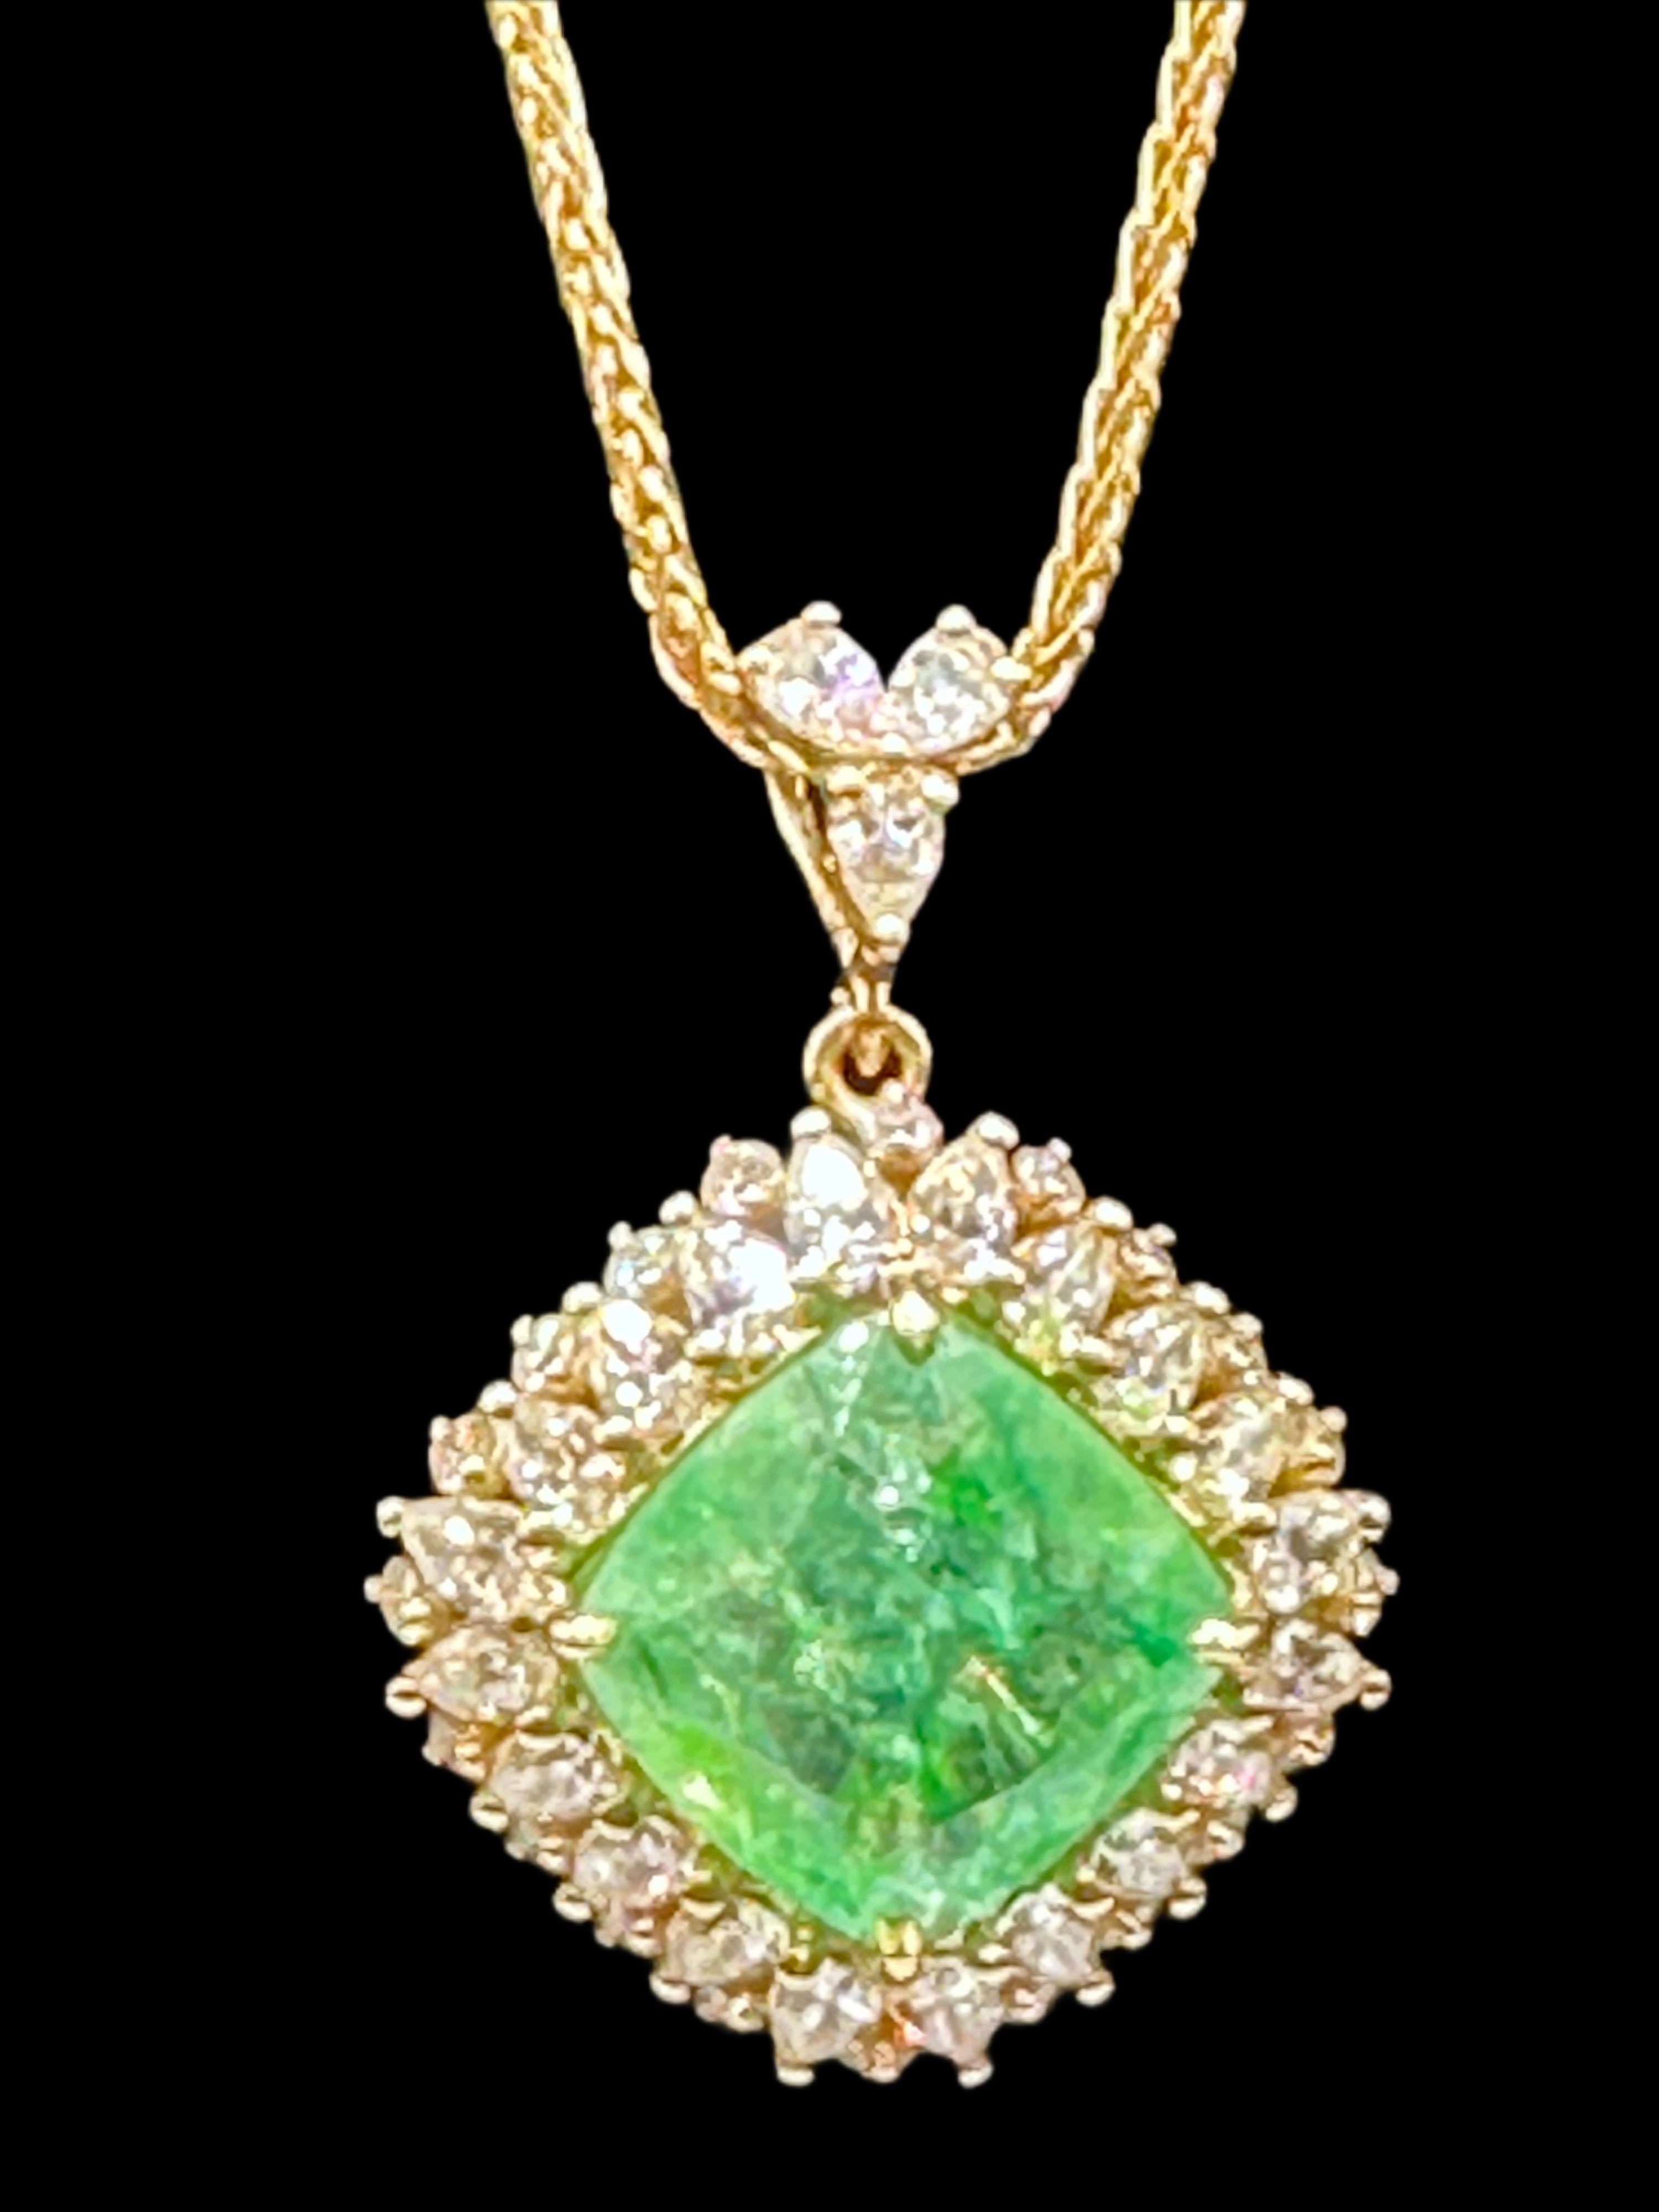 Round Diamonds: 0.59ct
Pear Shape Diamonds: 1.89ct
Center Stone: Emerald : 9.55ct